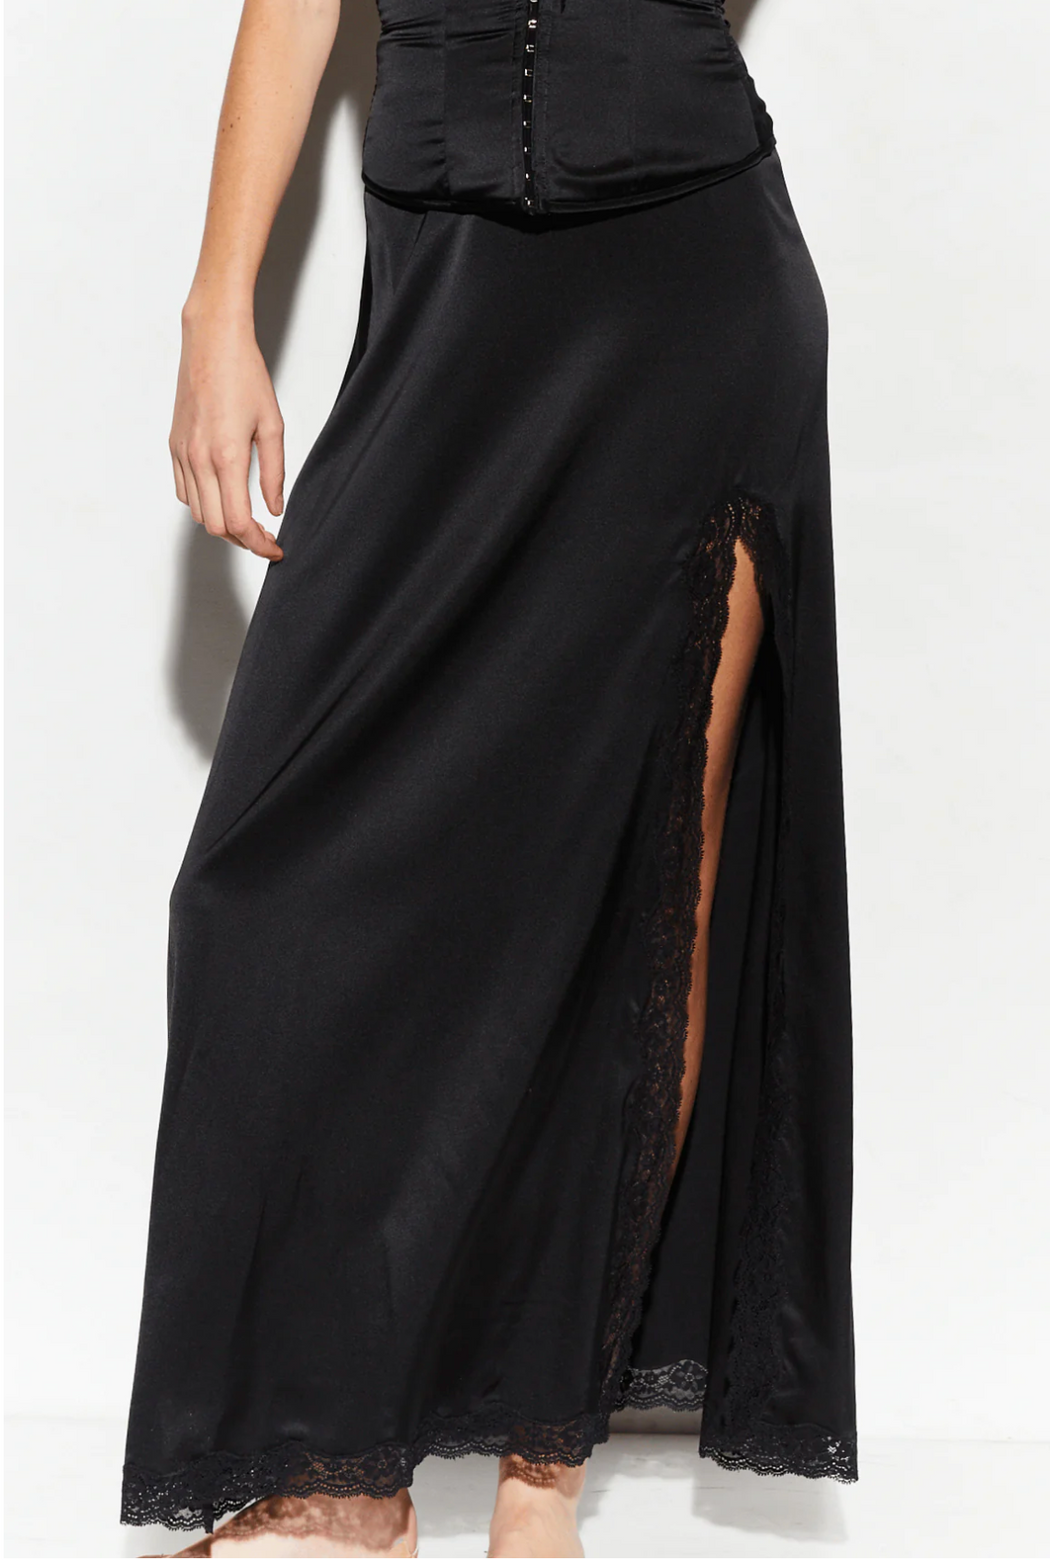 Vannina Vesperini :: Slit Skirt, Stretch Silk